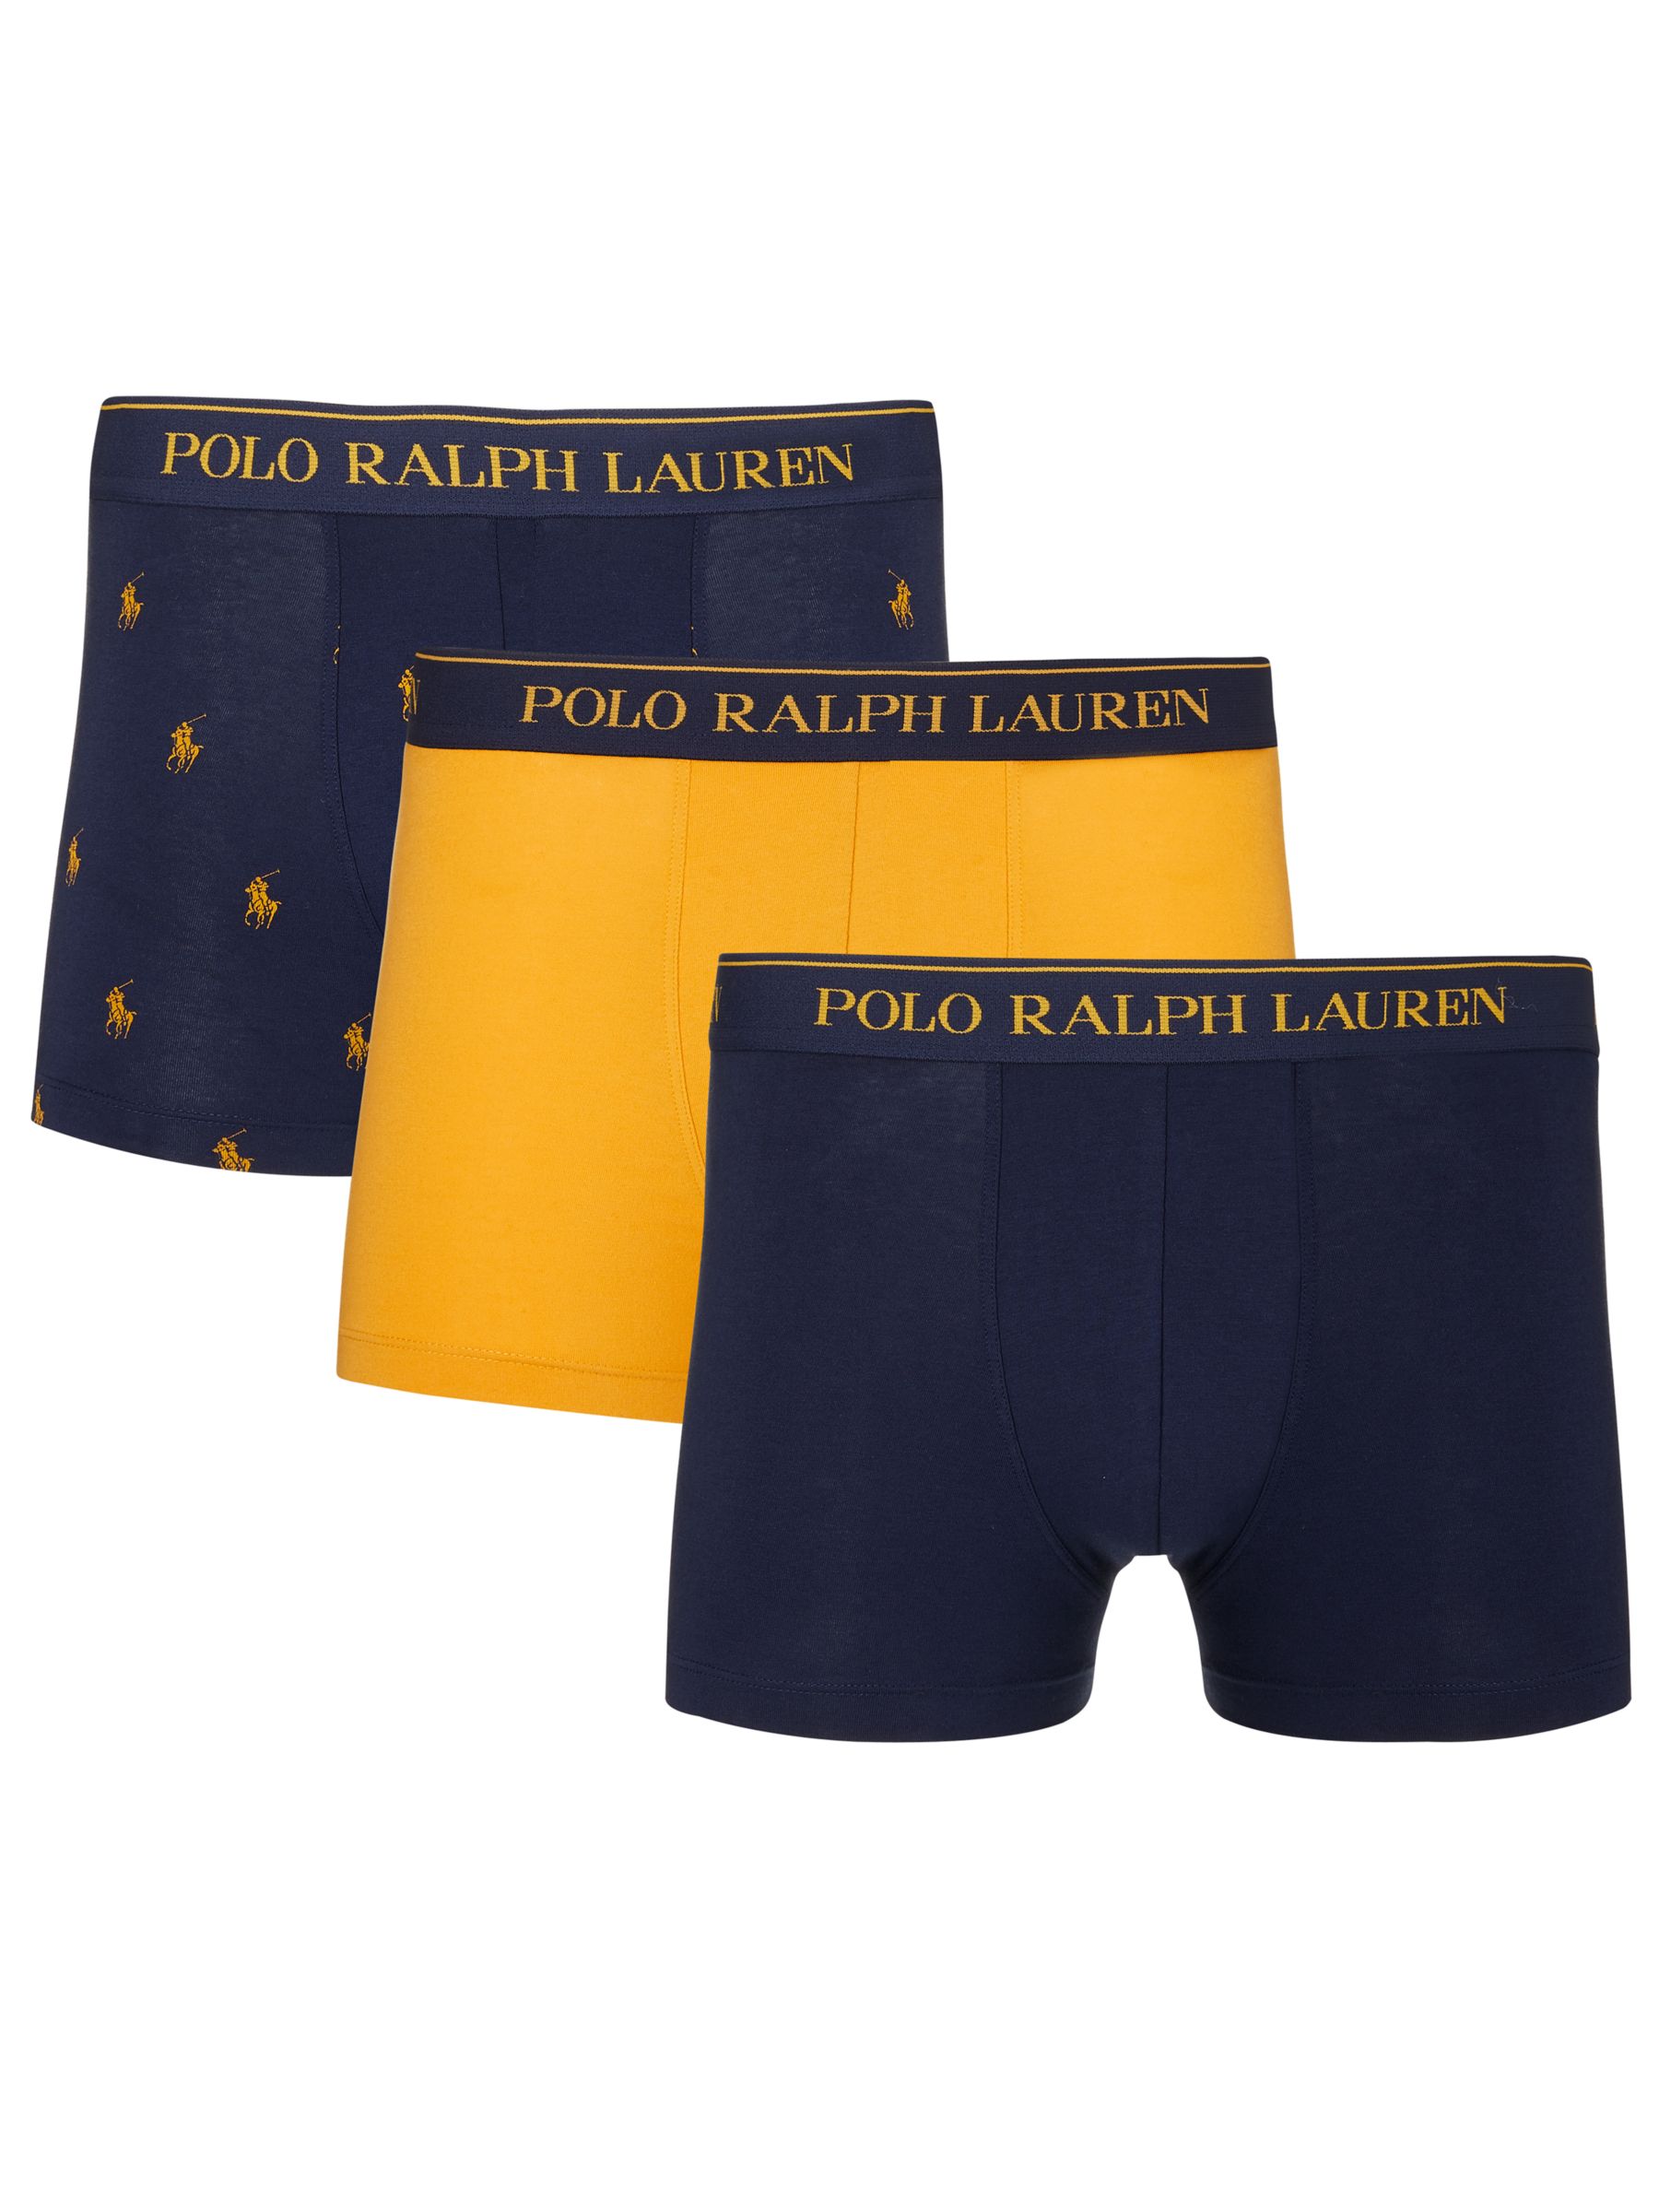 polo ralph lauren trunks